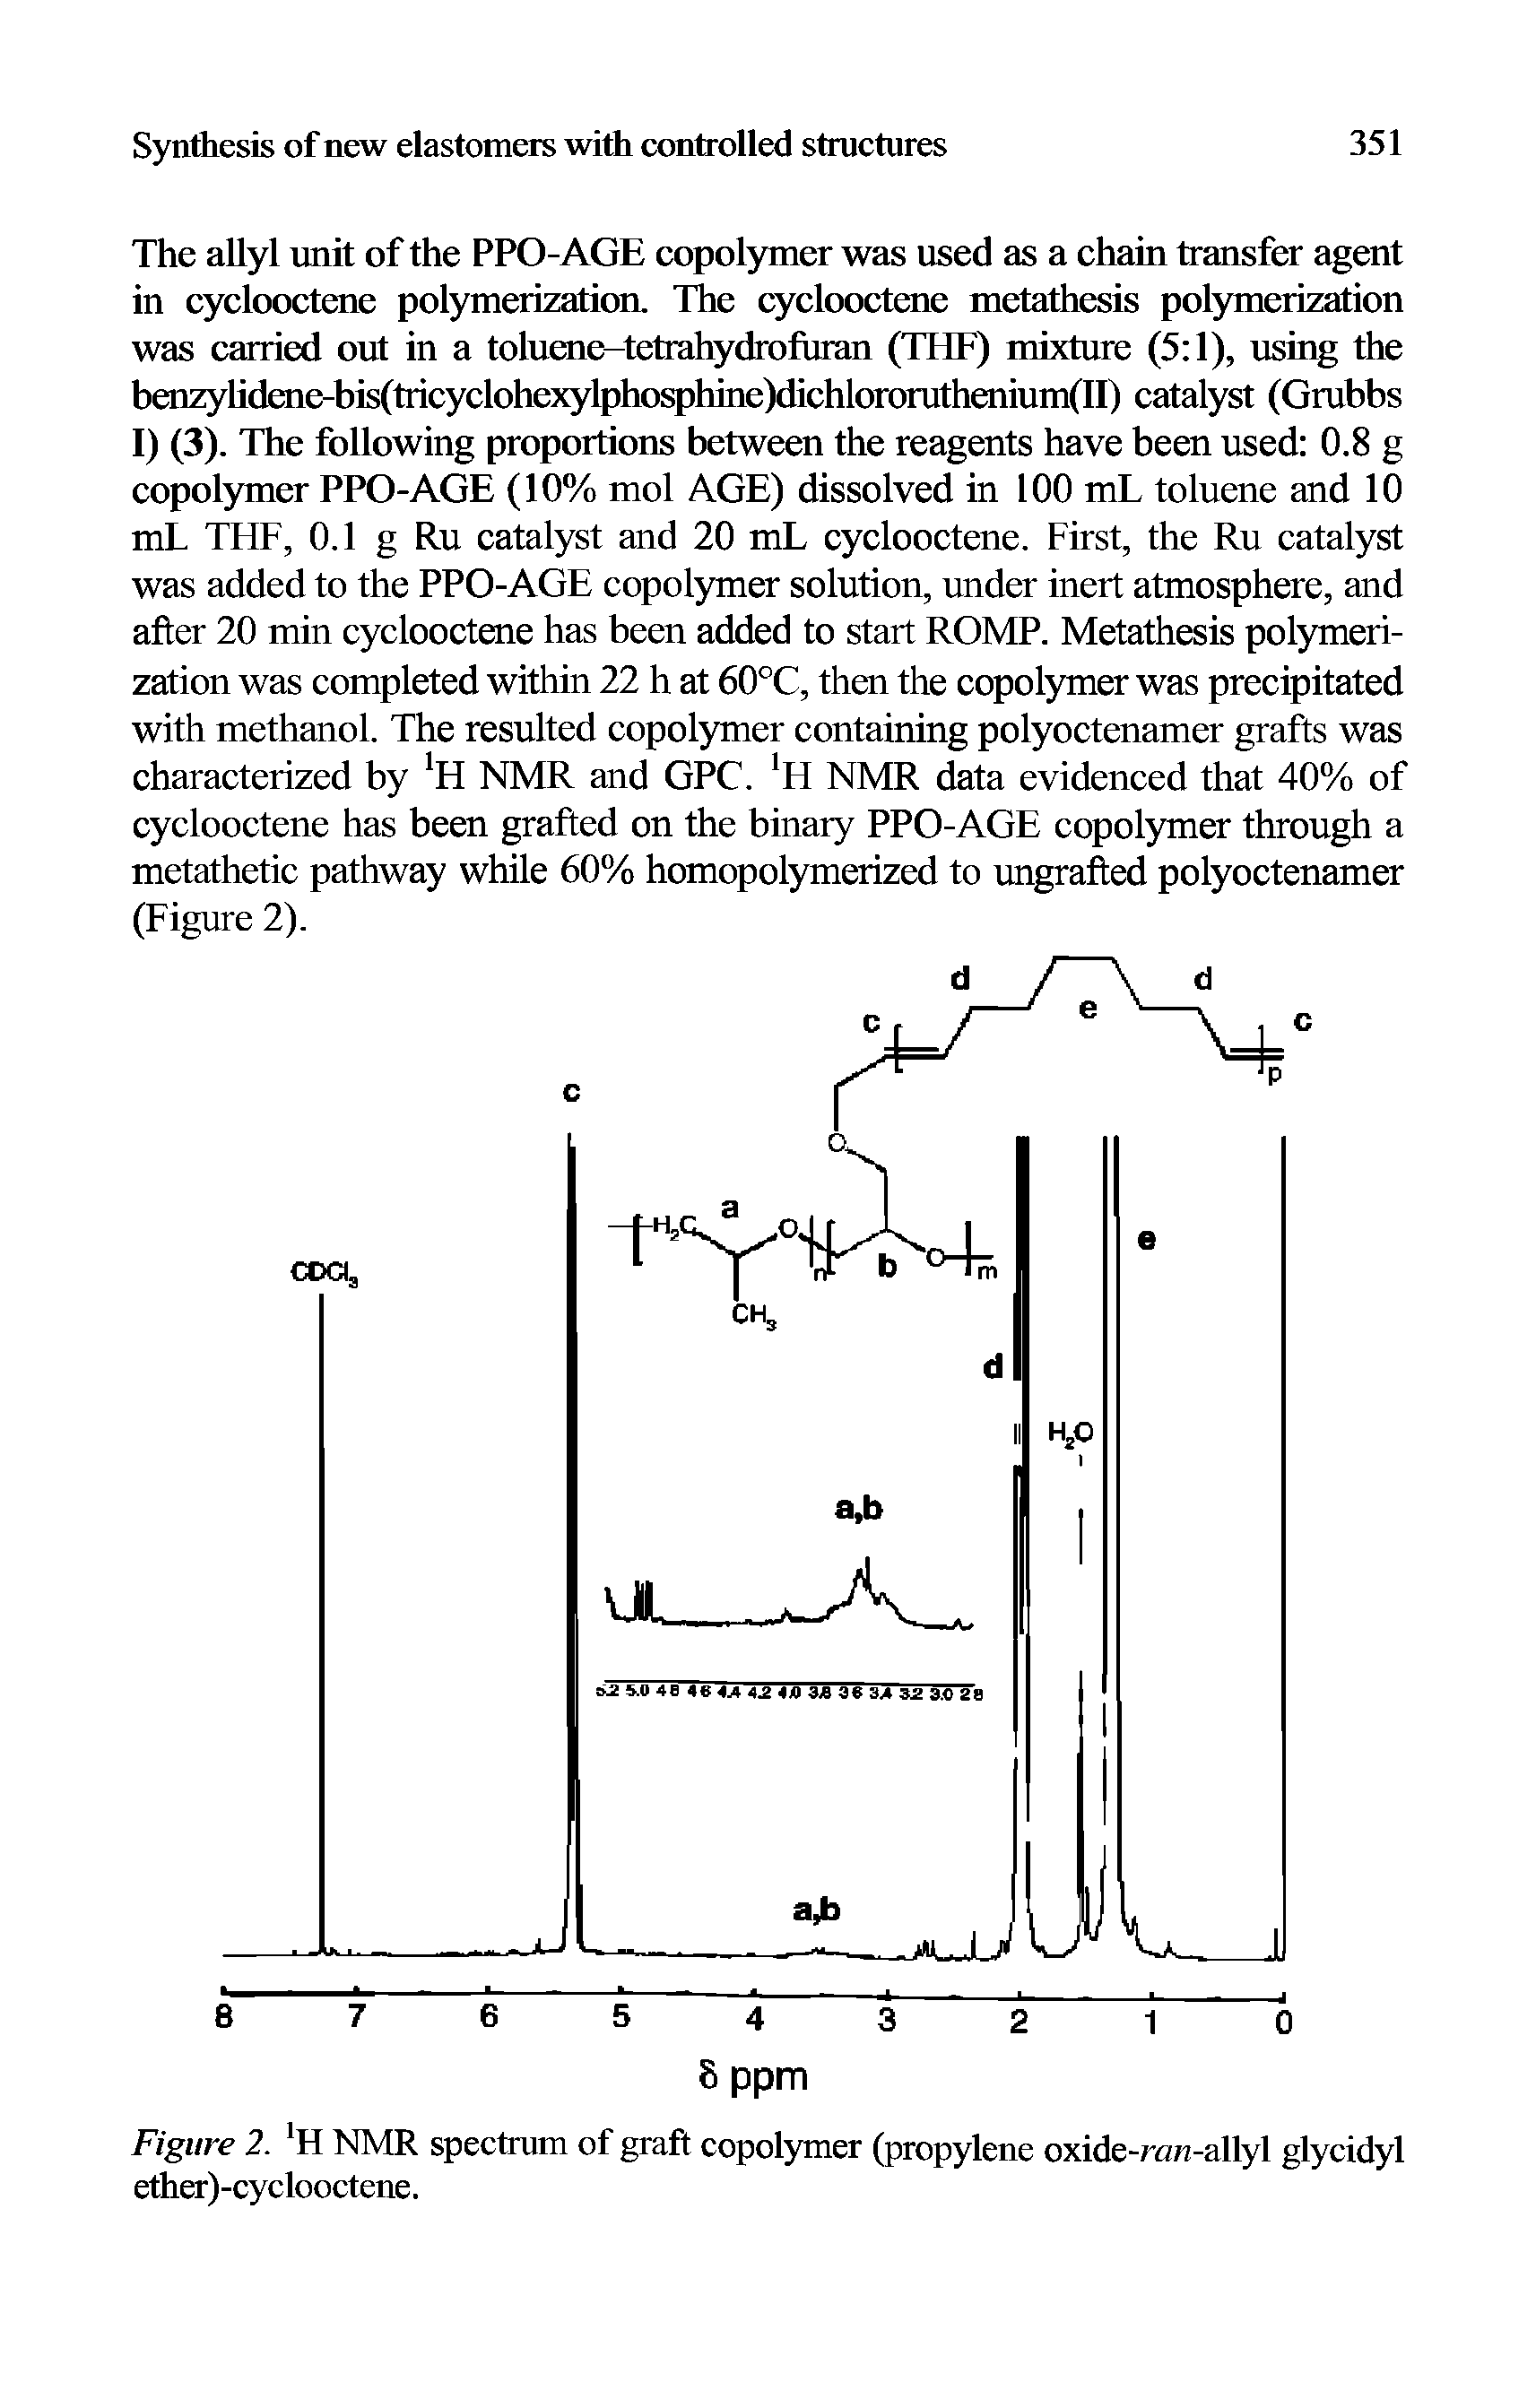 Figure 2. H NMR spectrum of graft copolymer (propylene oxide-raw-allyl glycidyl ether)-cyclooctene.